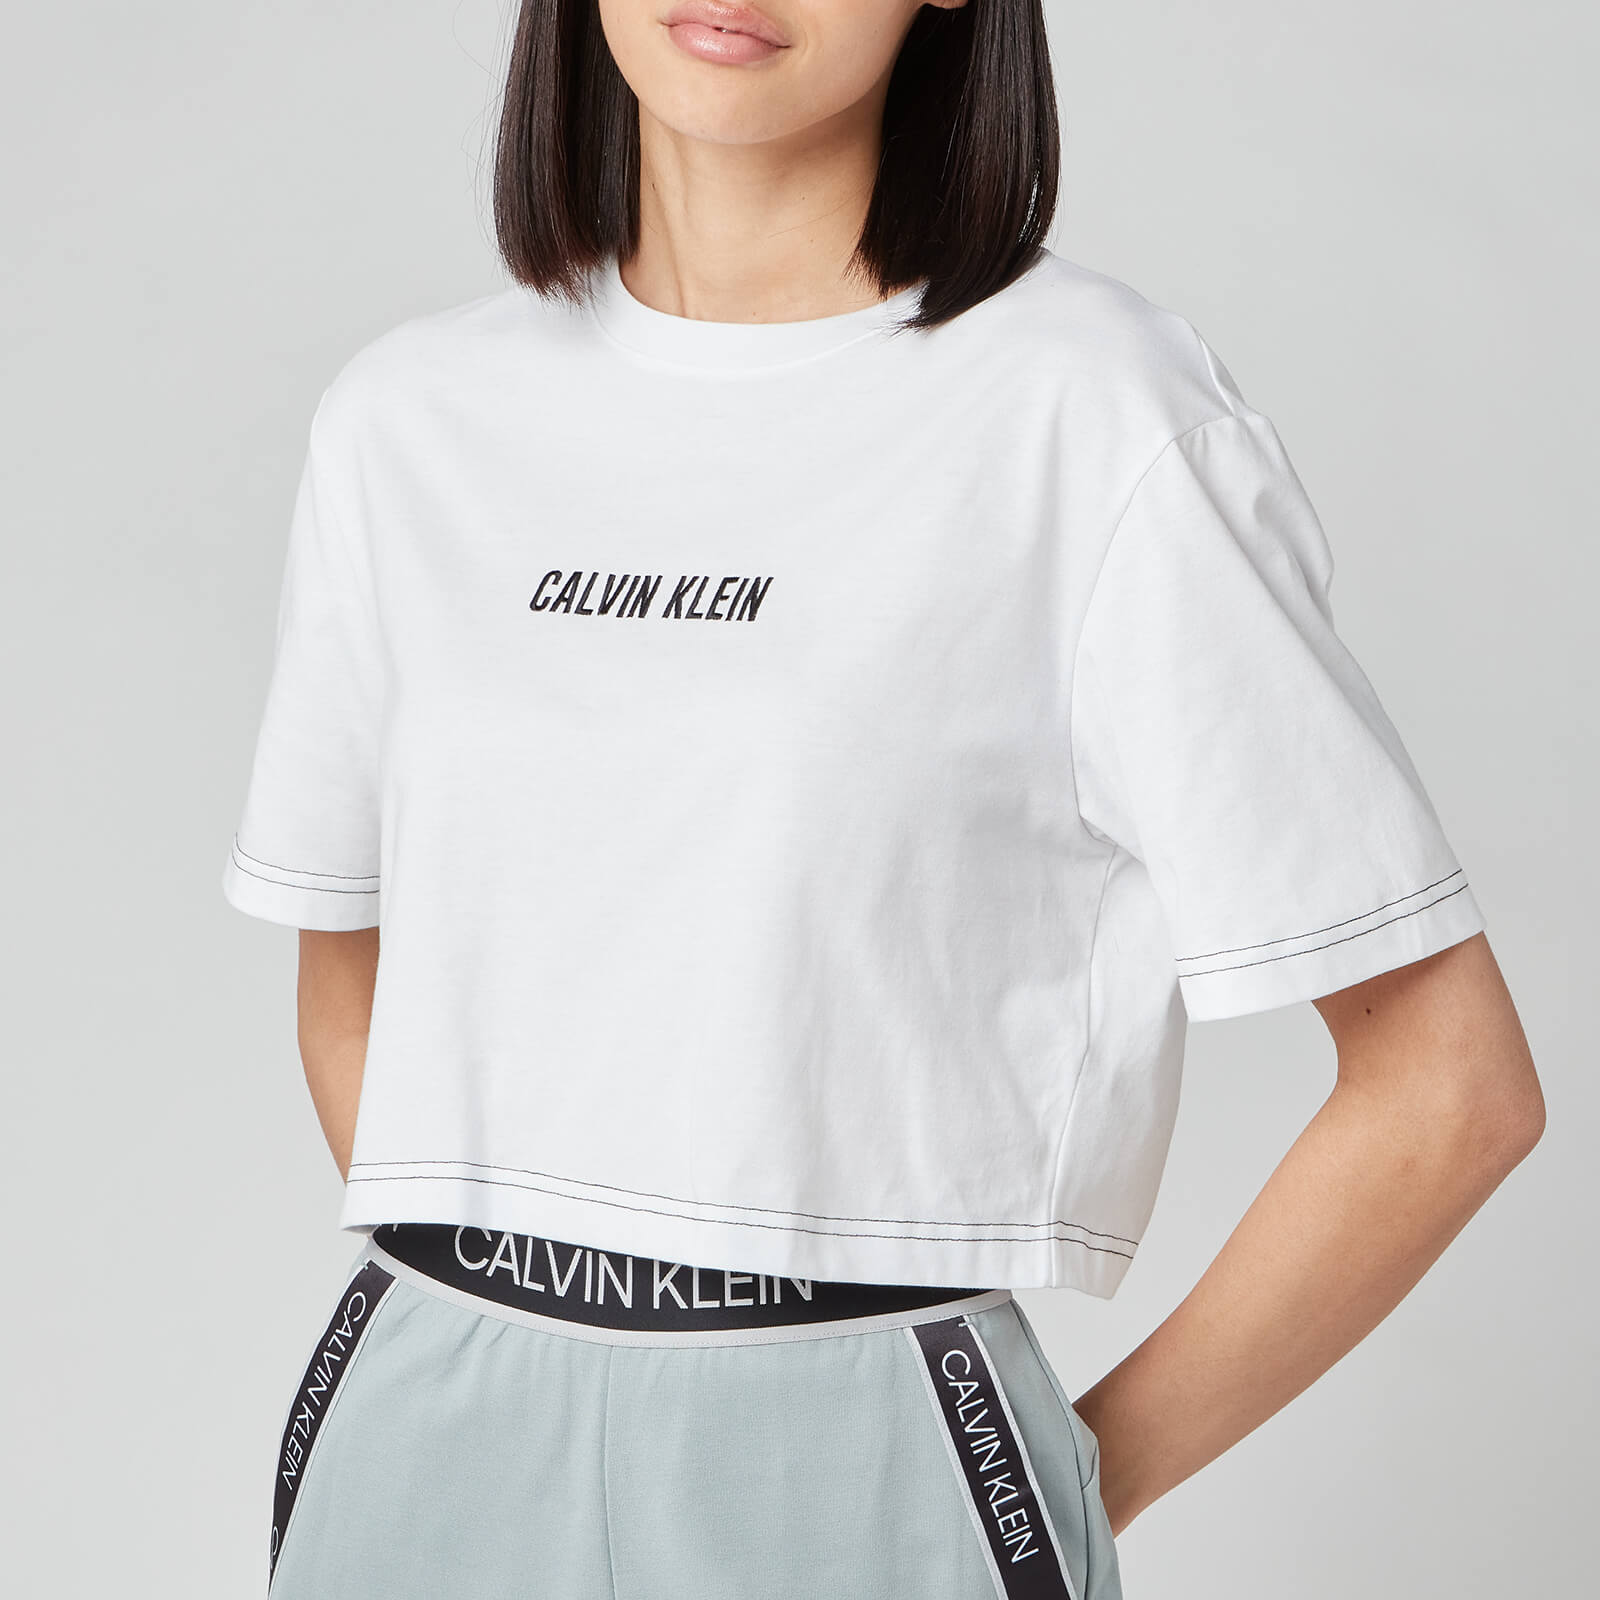 Calvin Klein Performance Women's Open Back Cropped Short Sleeve T-Shirt - Bright White - M